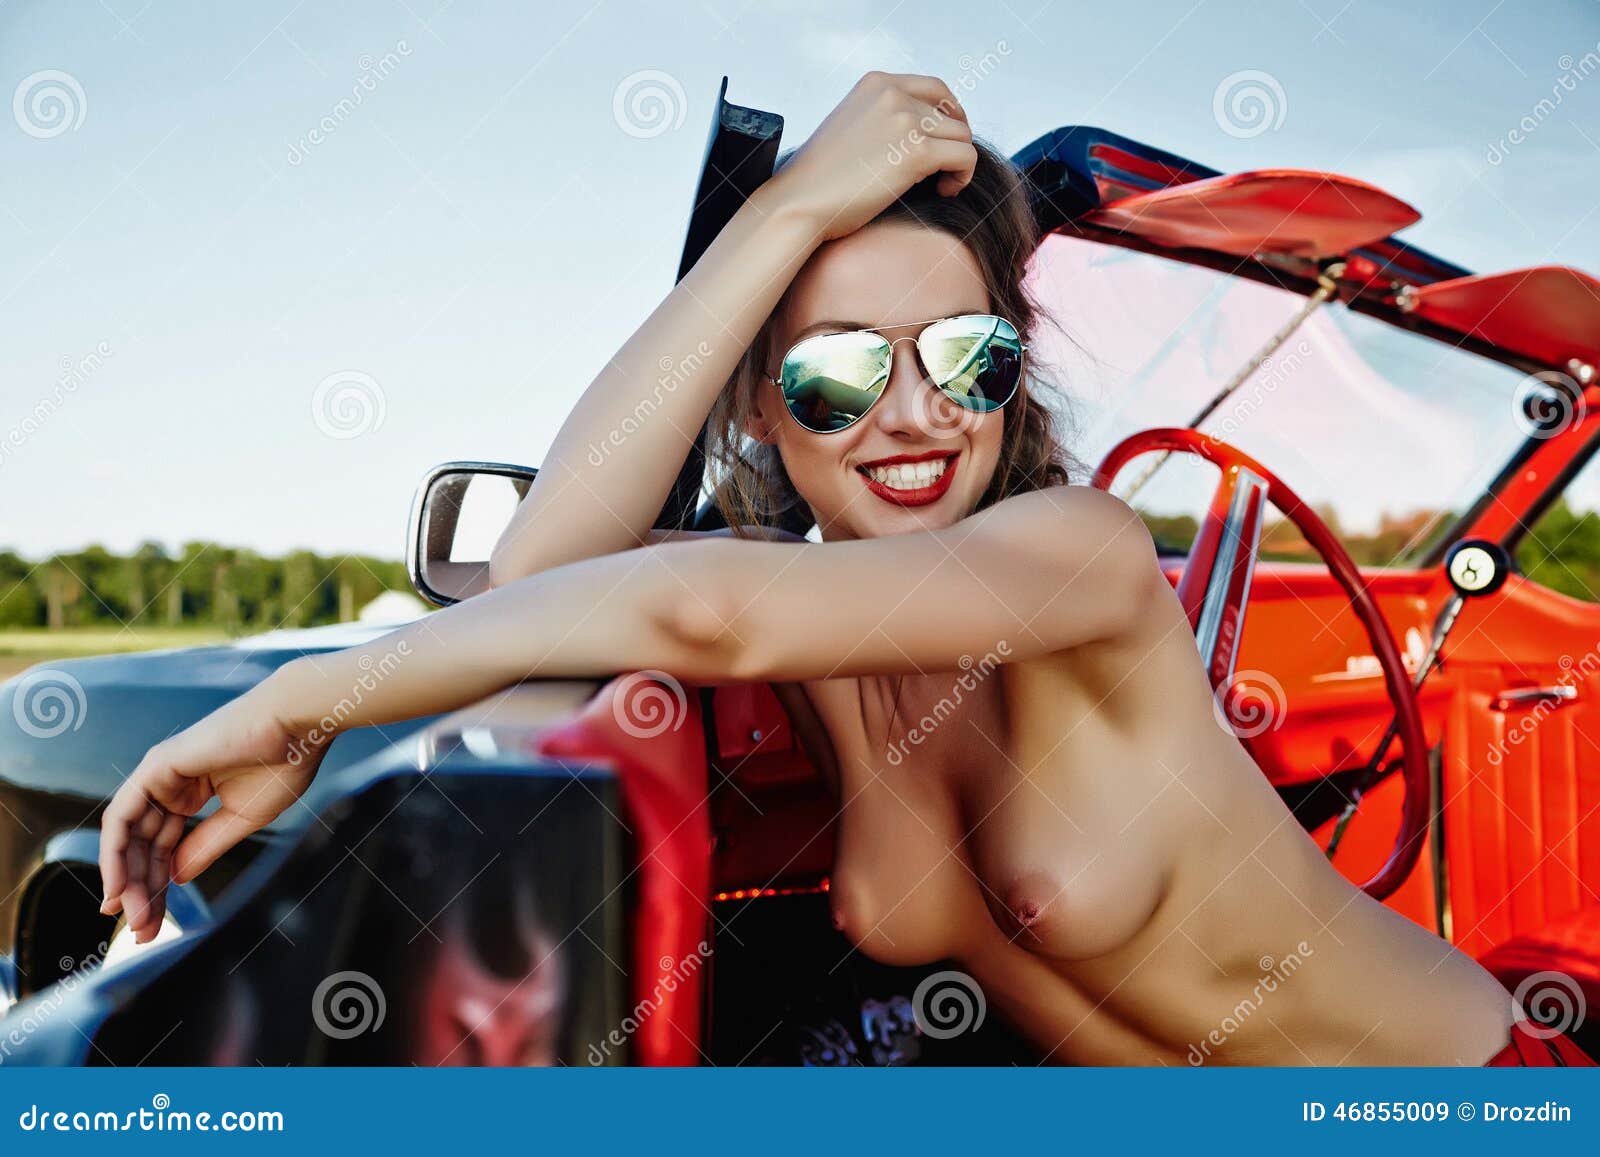 argel miranda add photo topless girls and cars